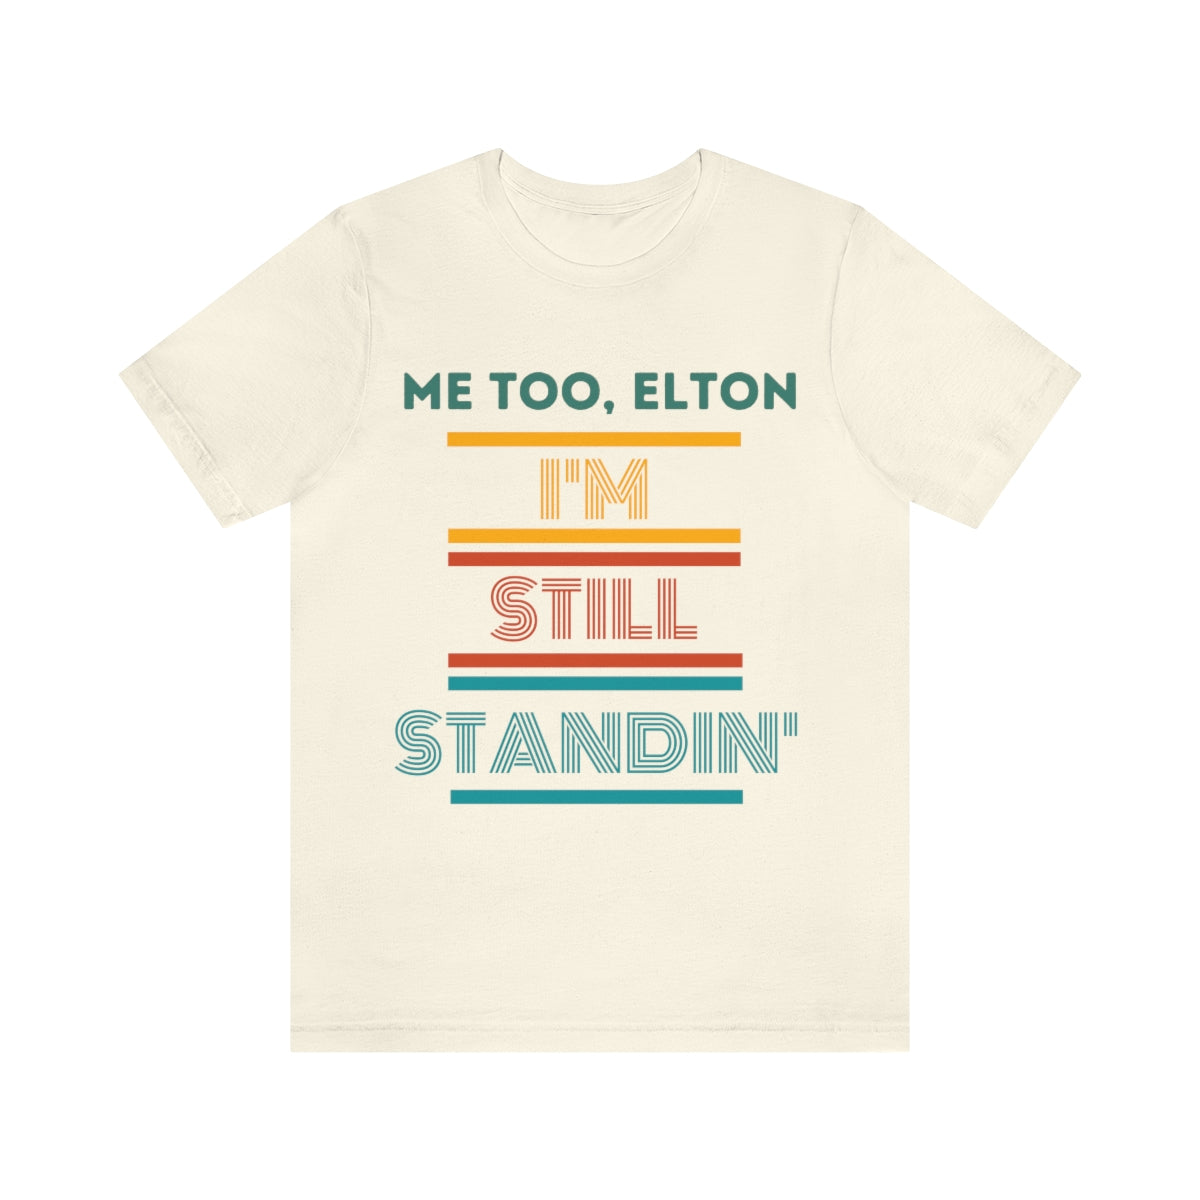 "Me Too, Elton" T-Shirt (White. Black, & Natural Available)